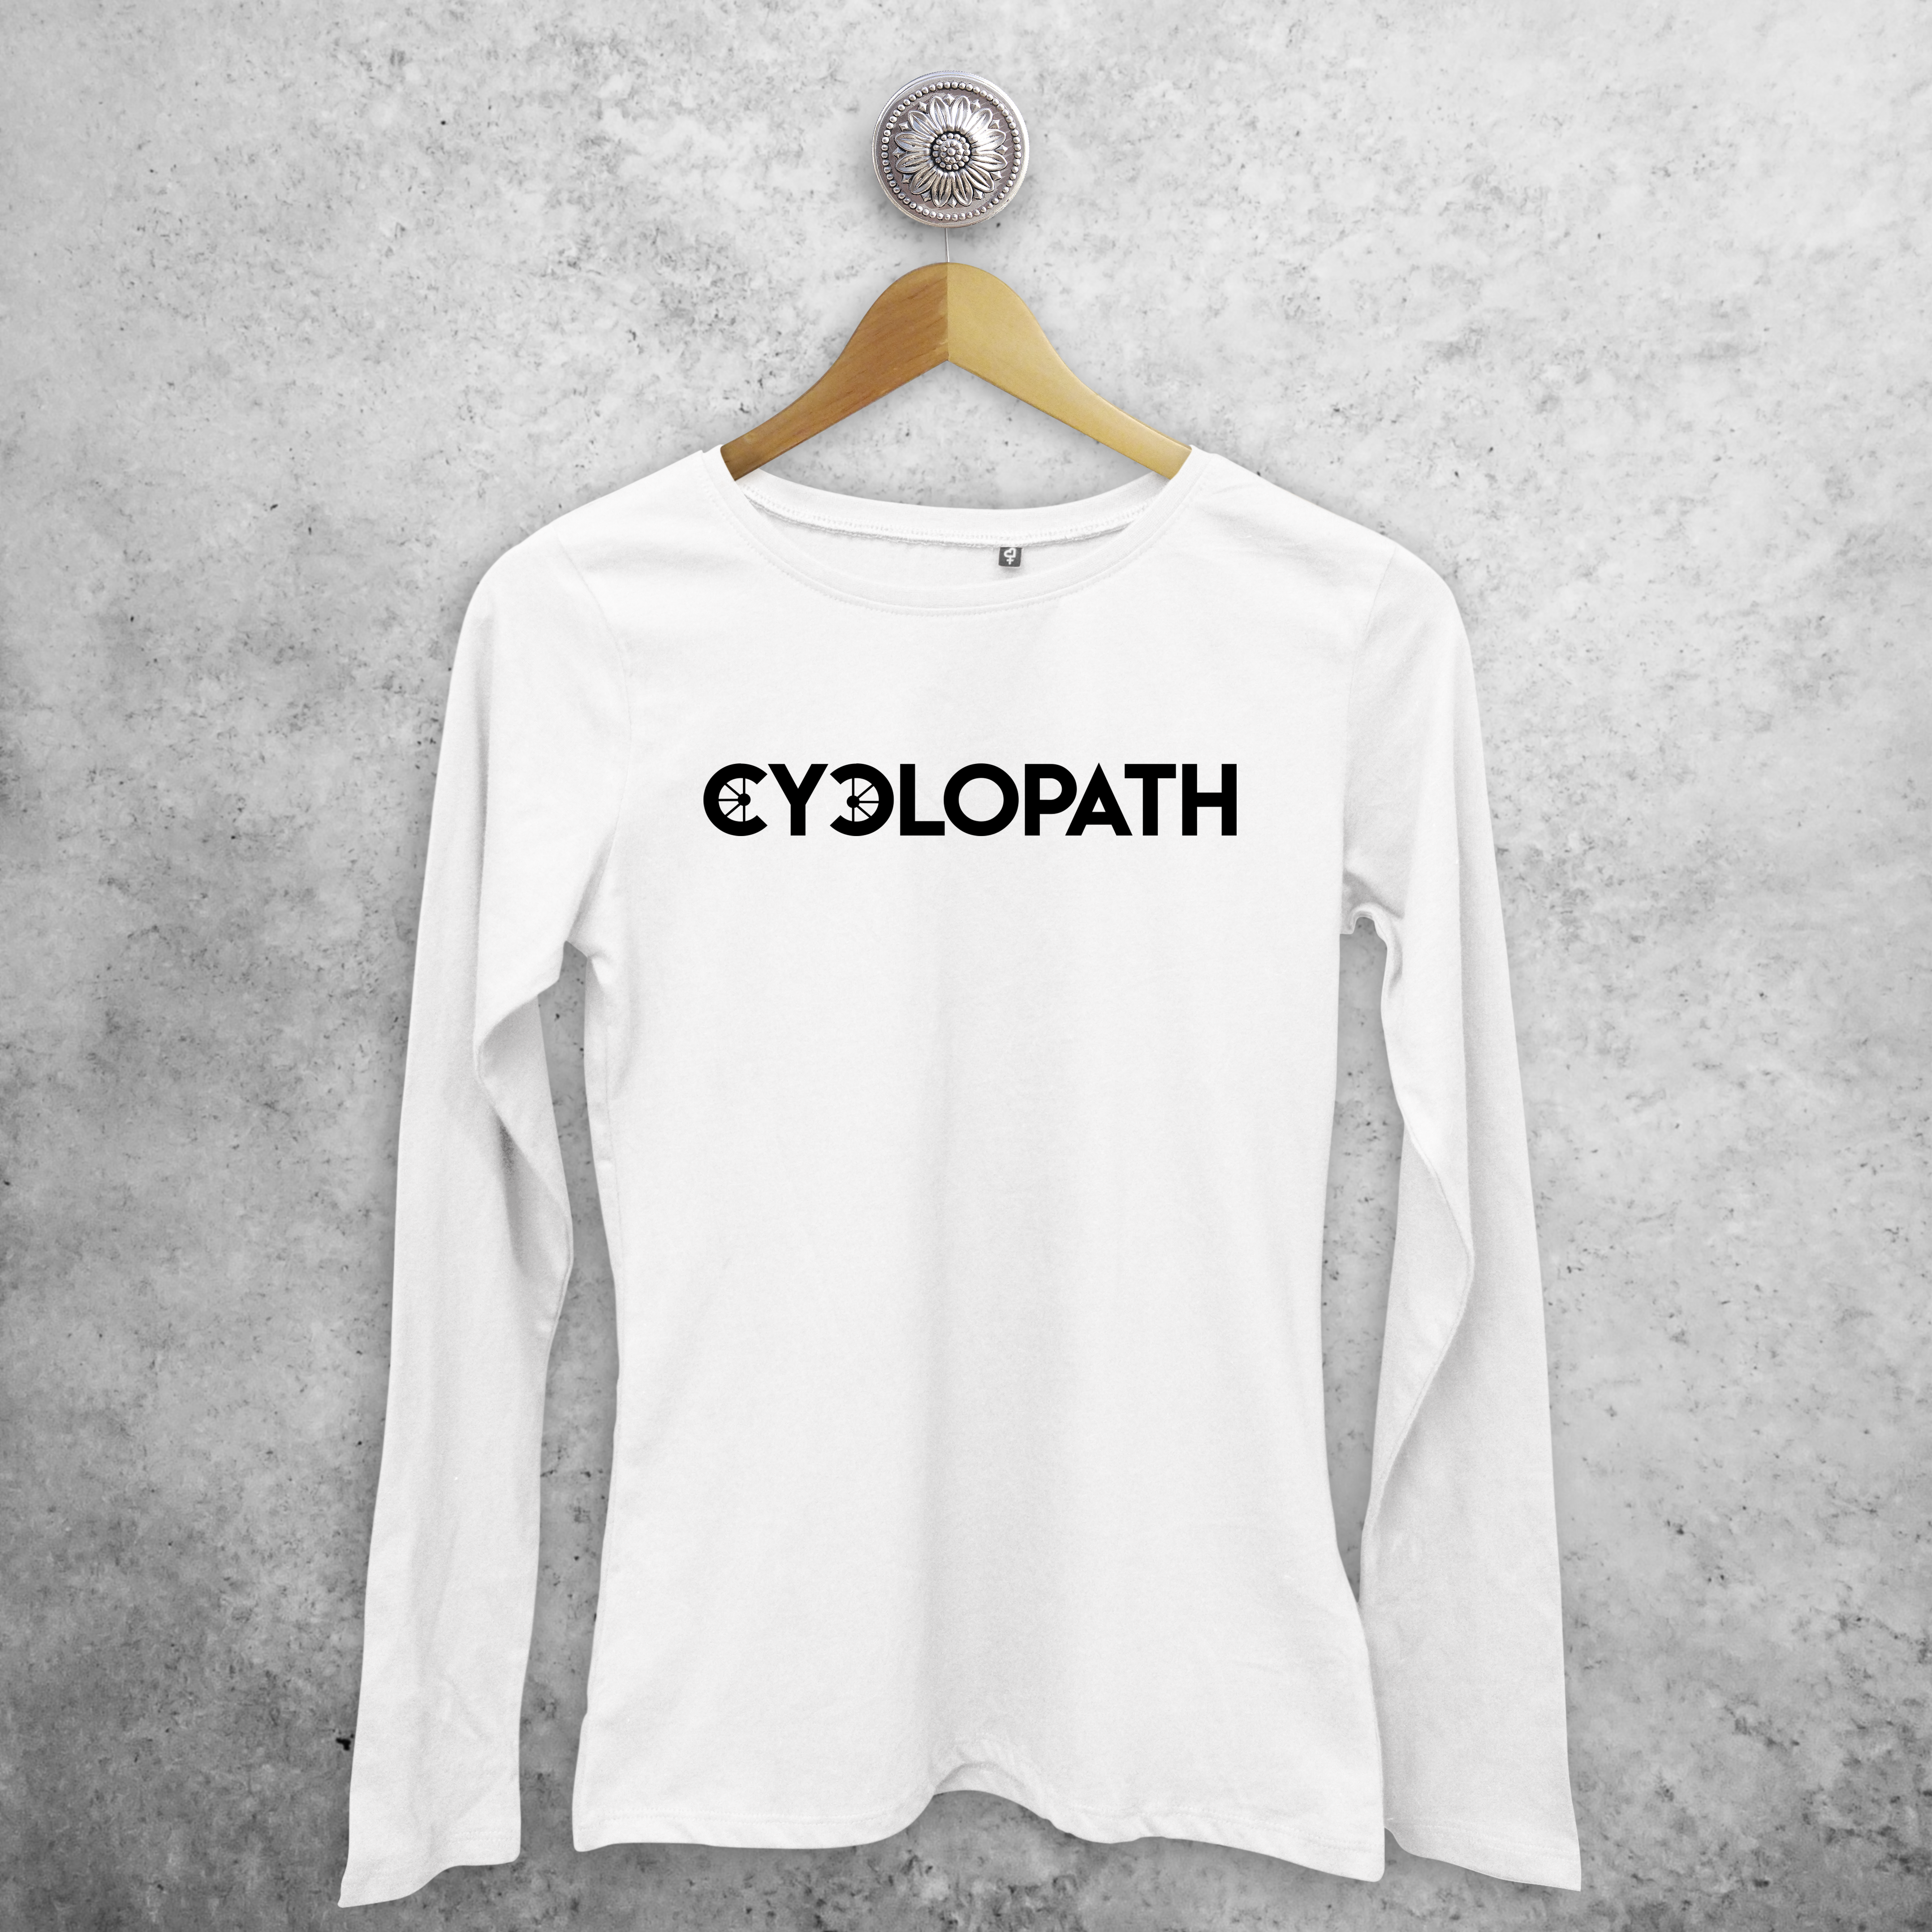 'Cyclopath' volwassene shirt met lange mouwen